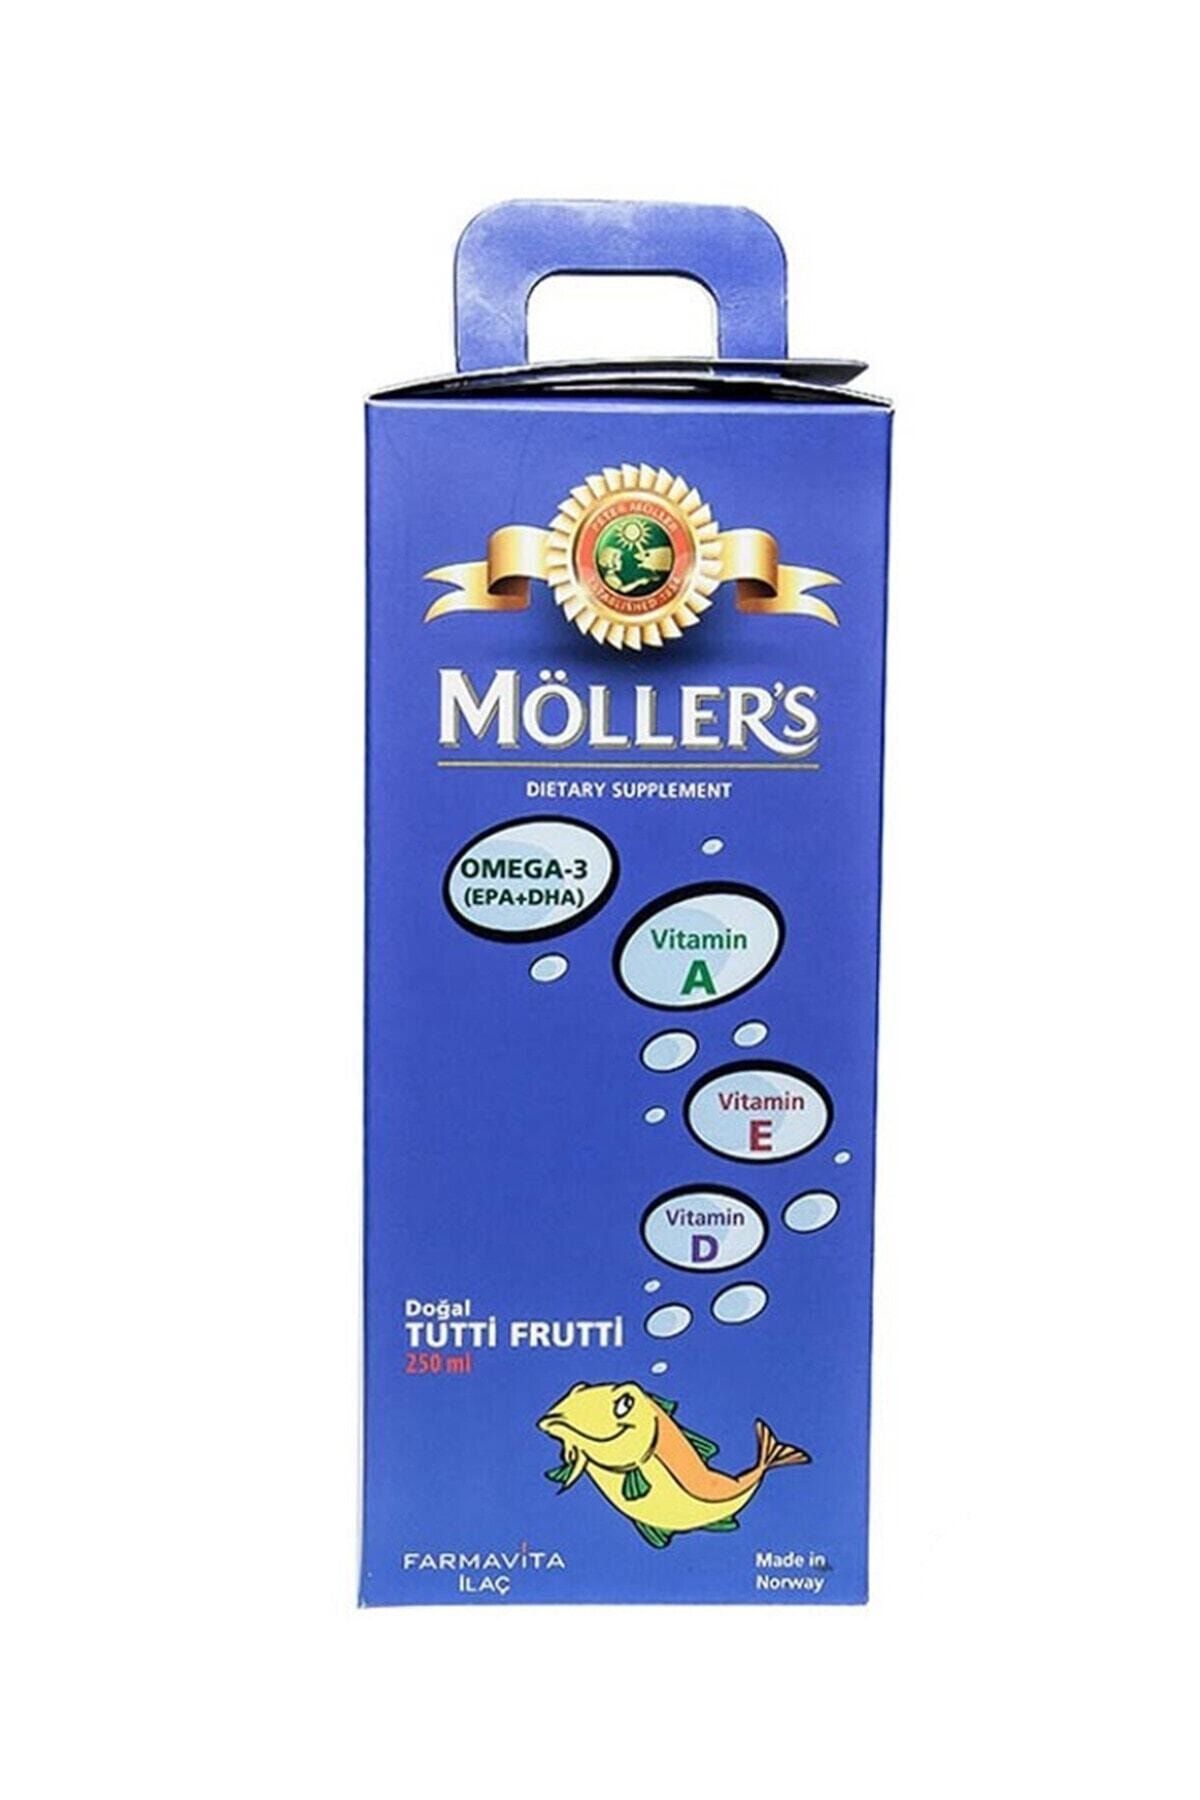 Mollers Omega 3 Cod Liver Oil 250 Ml